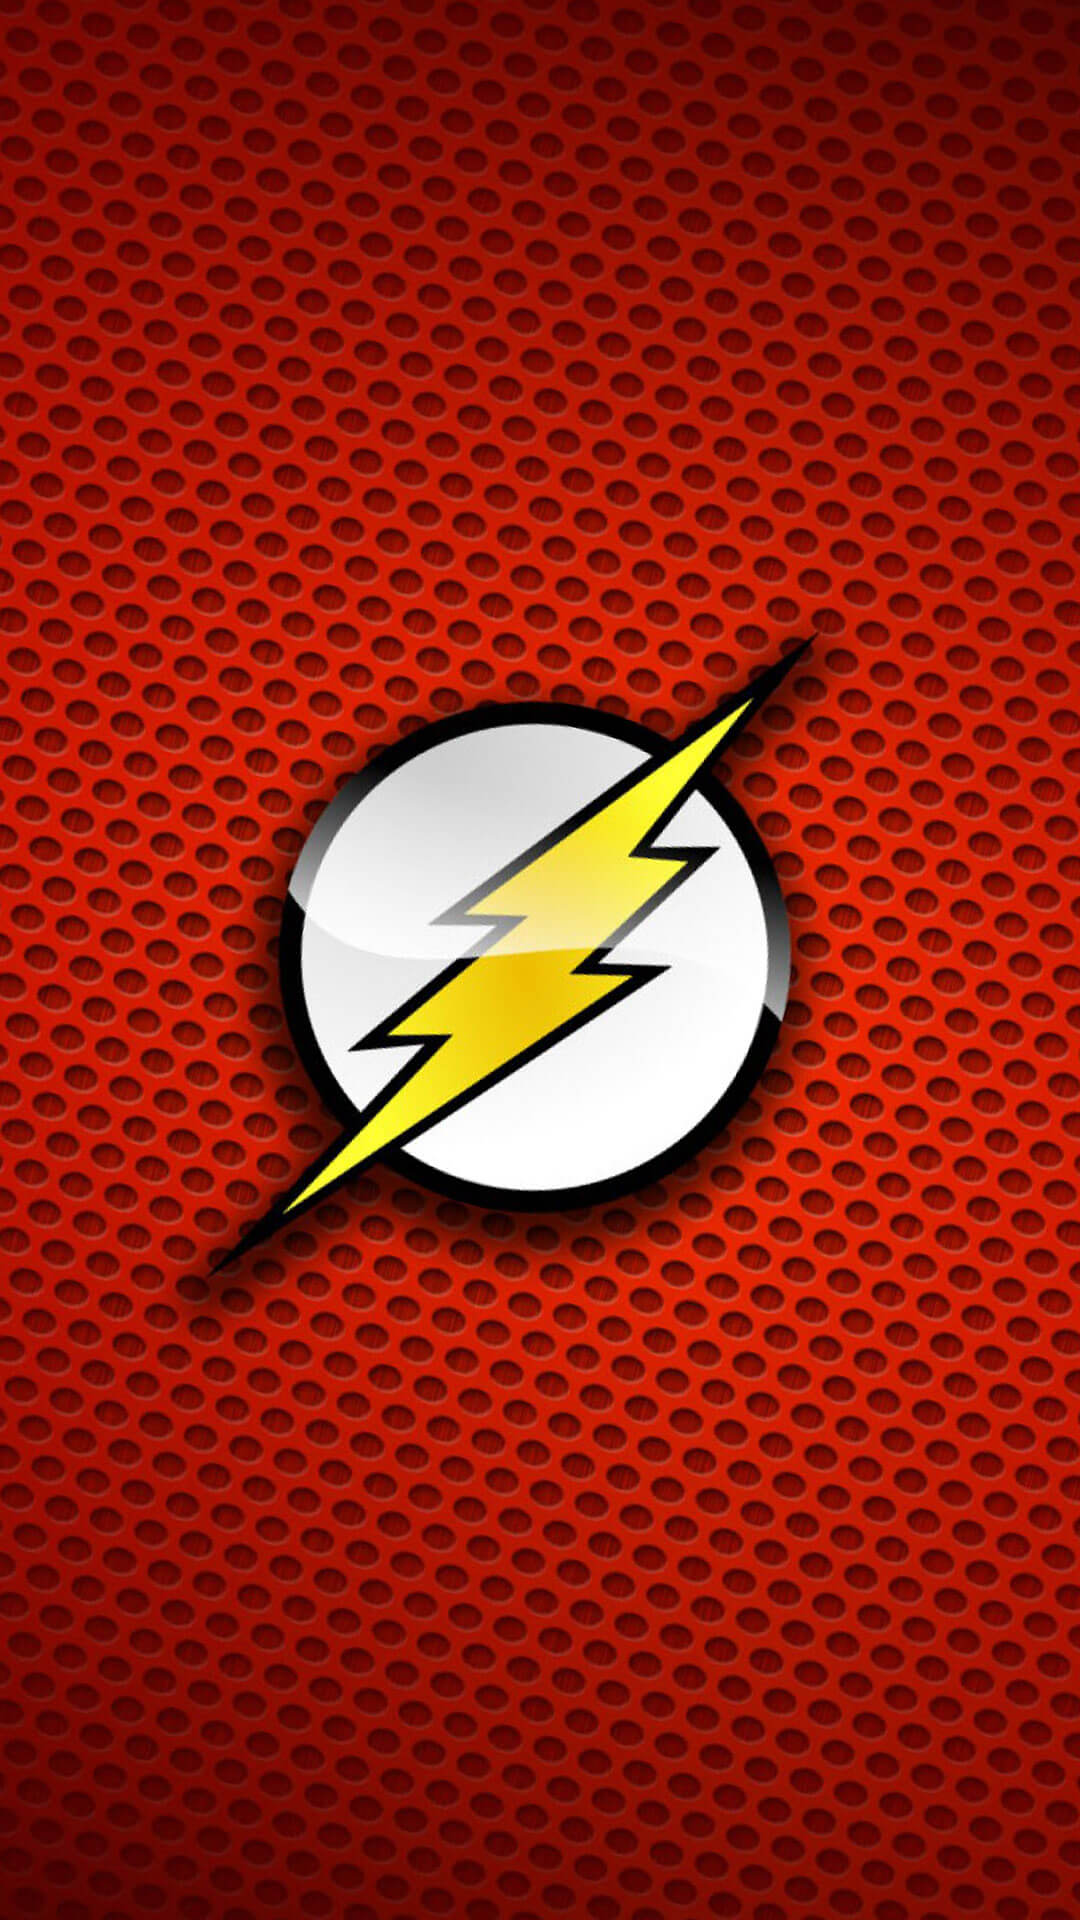 The Flash Logo iPhone Wallpaper HD